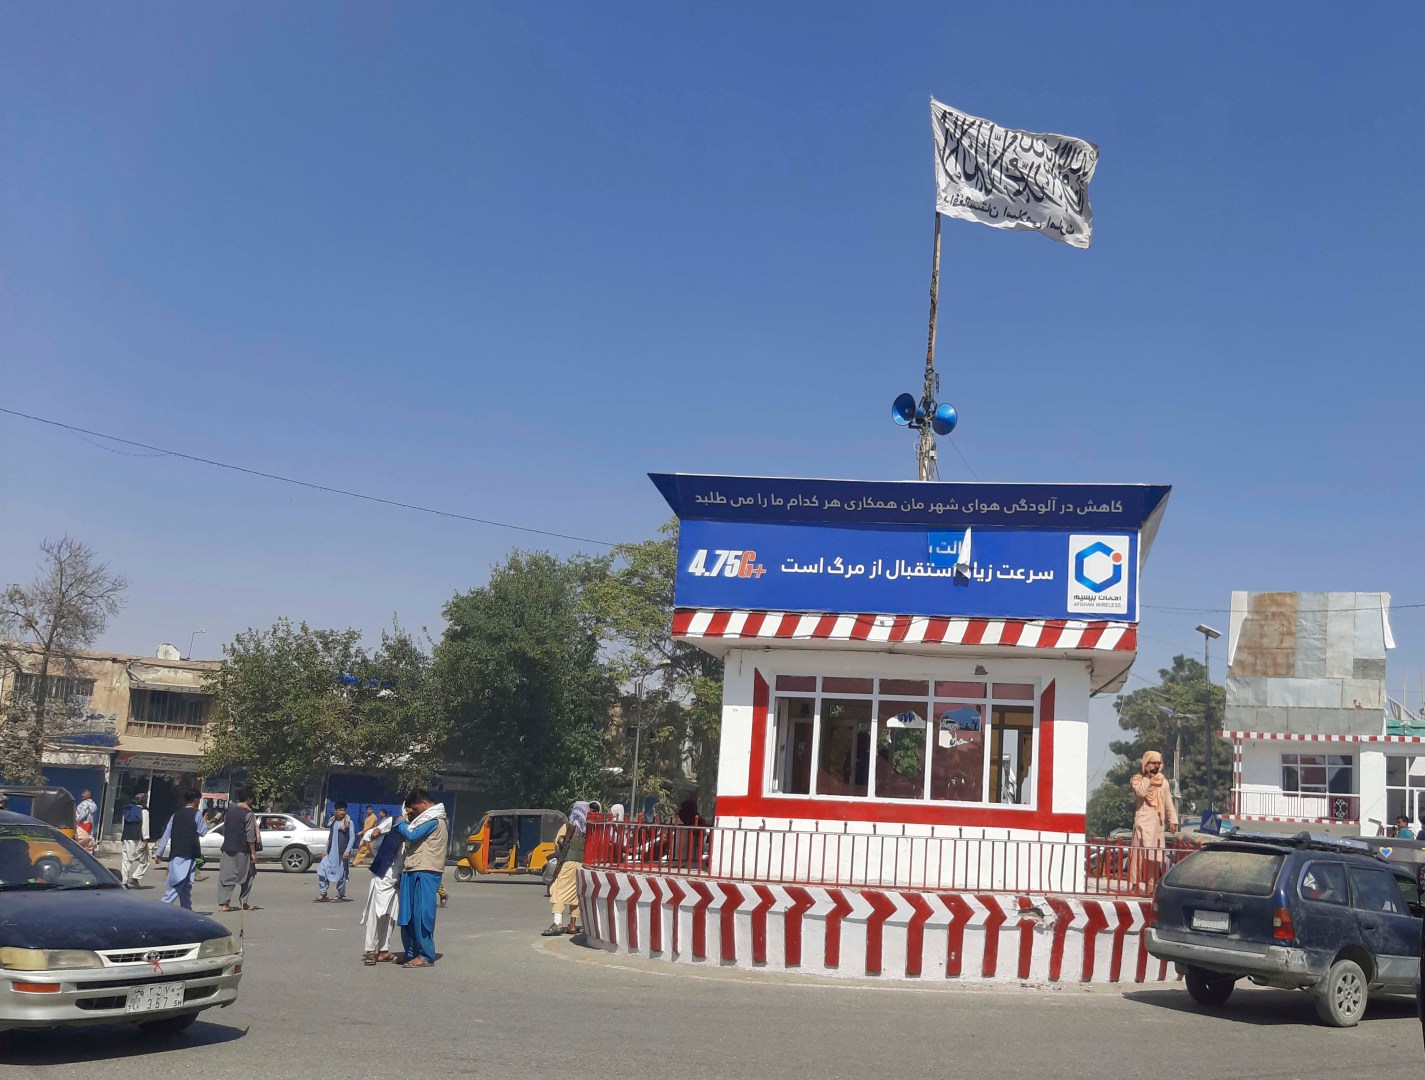 Taliban capital cities